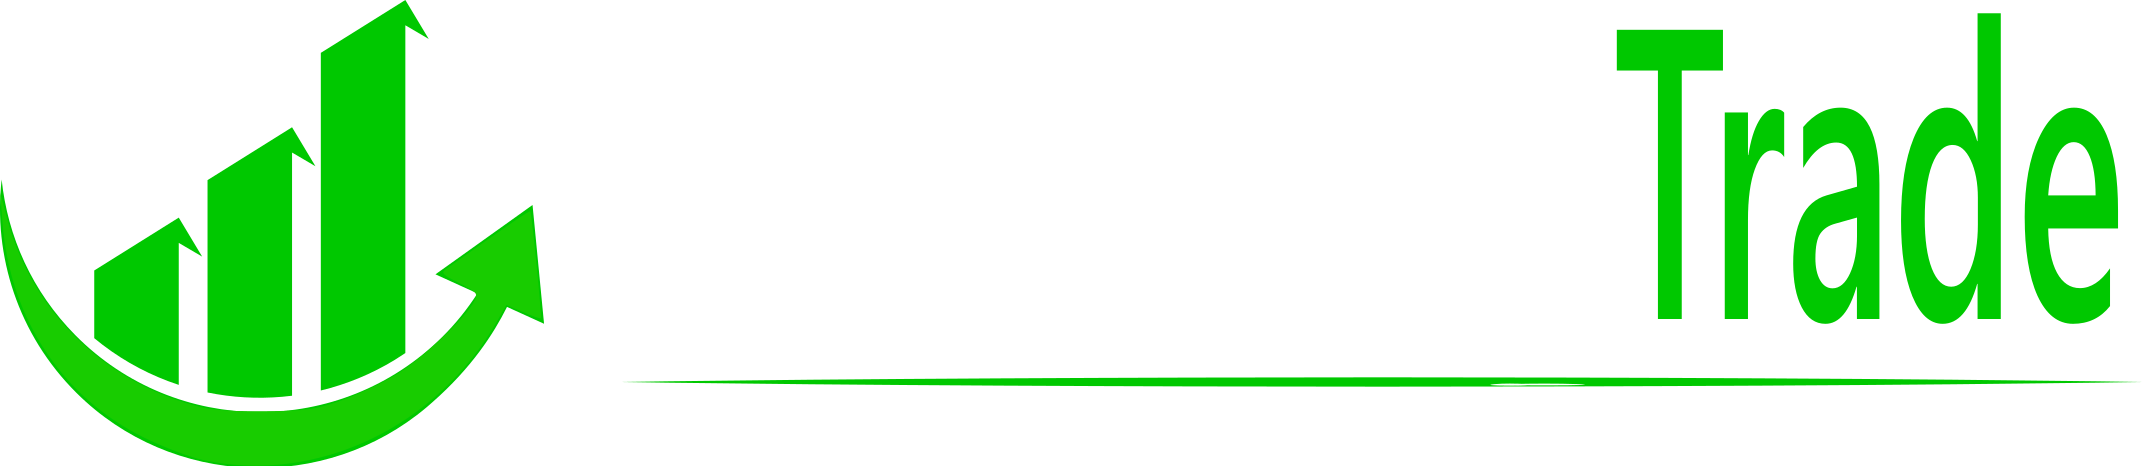 FocusPlanTrade